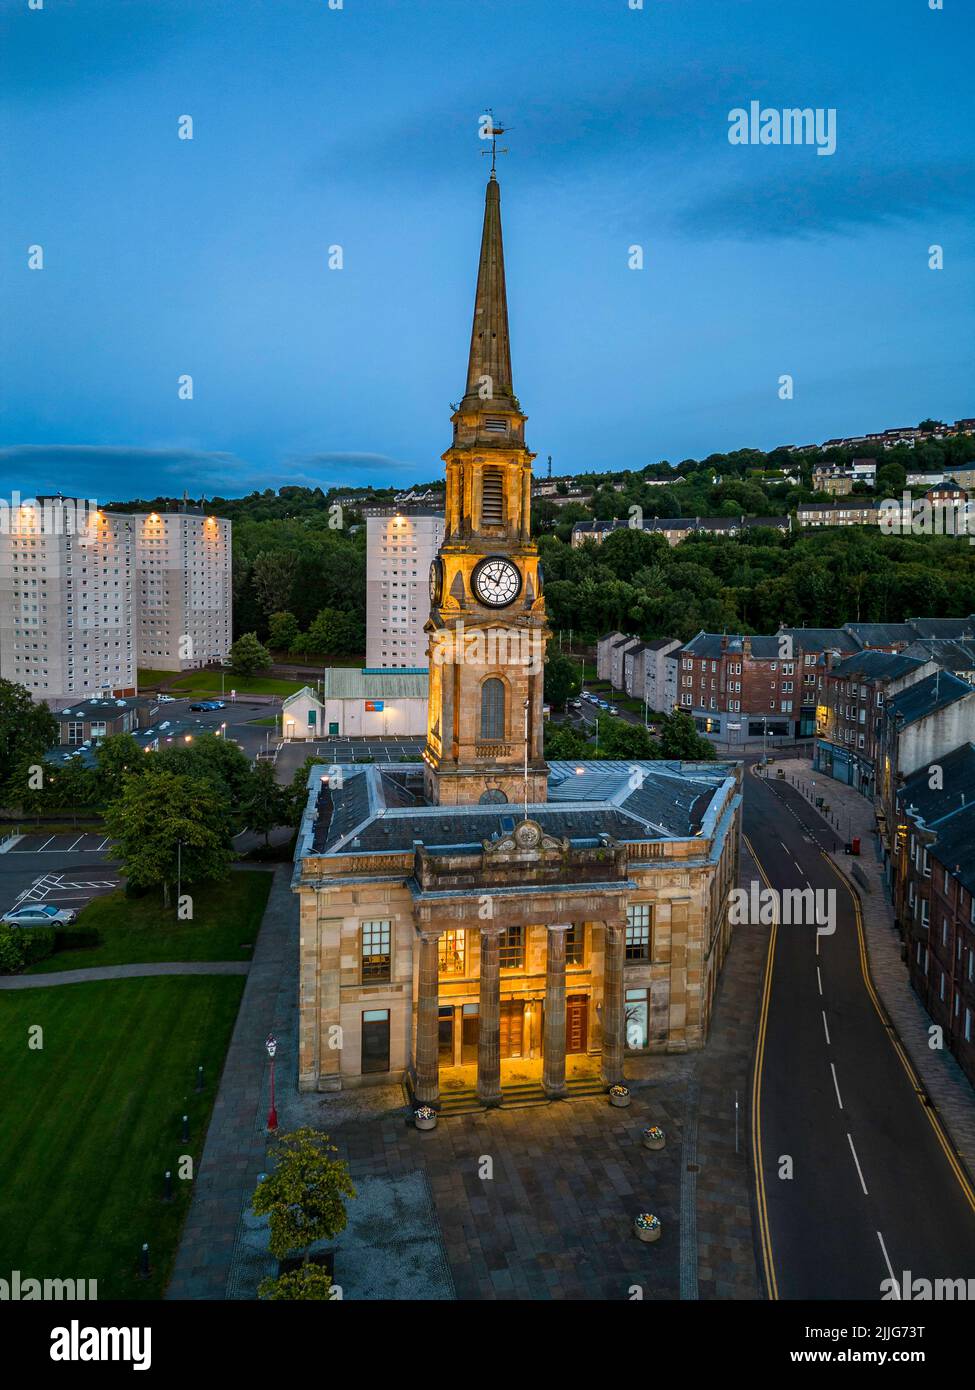 Port Glasgow Municipal Buildings, Port Glasgow, Scotland, UK Stock Photo